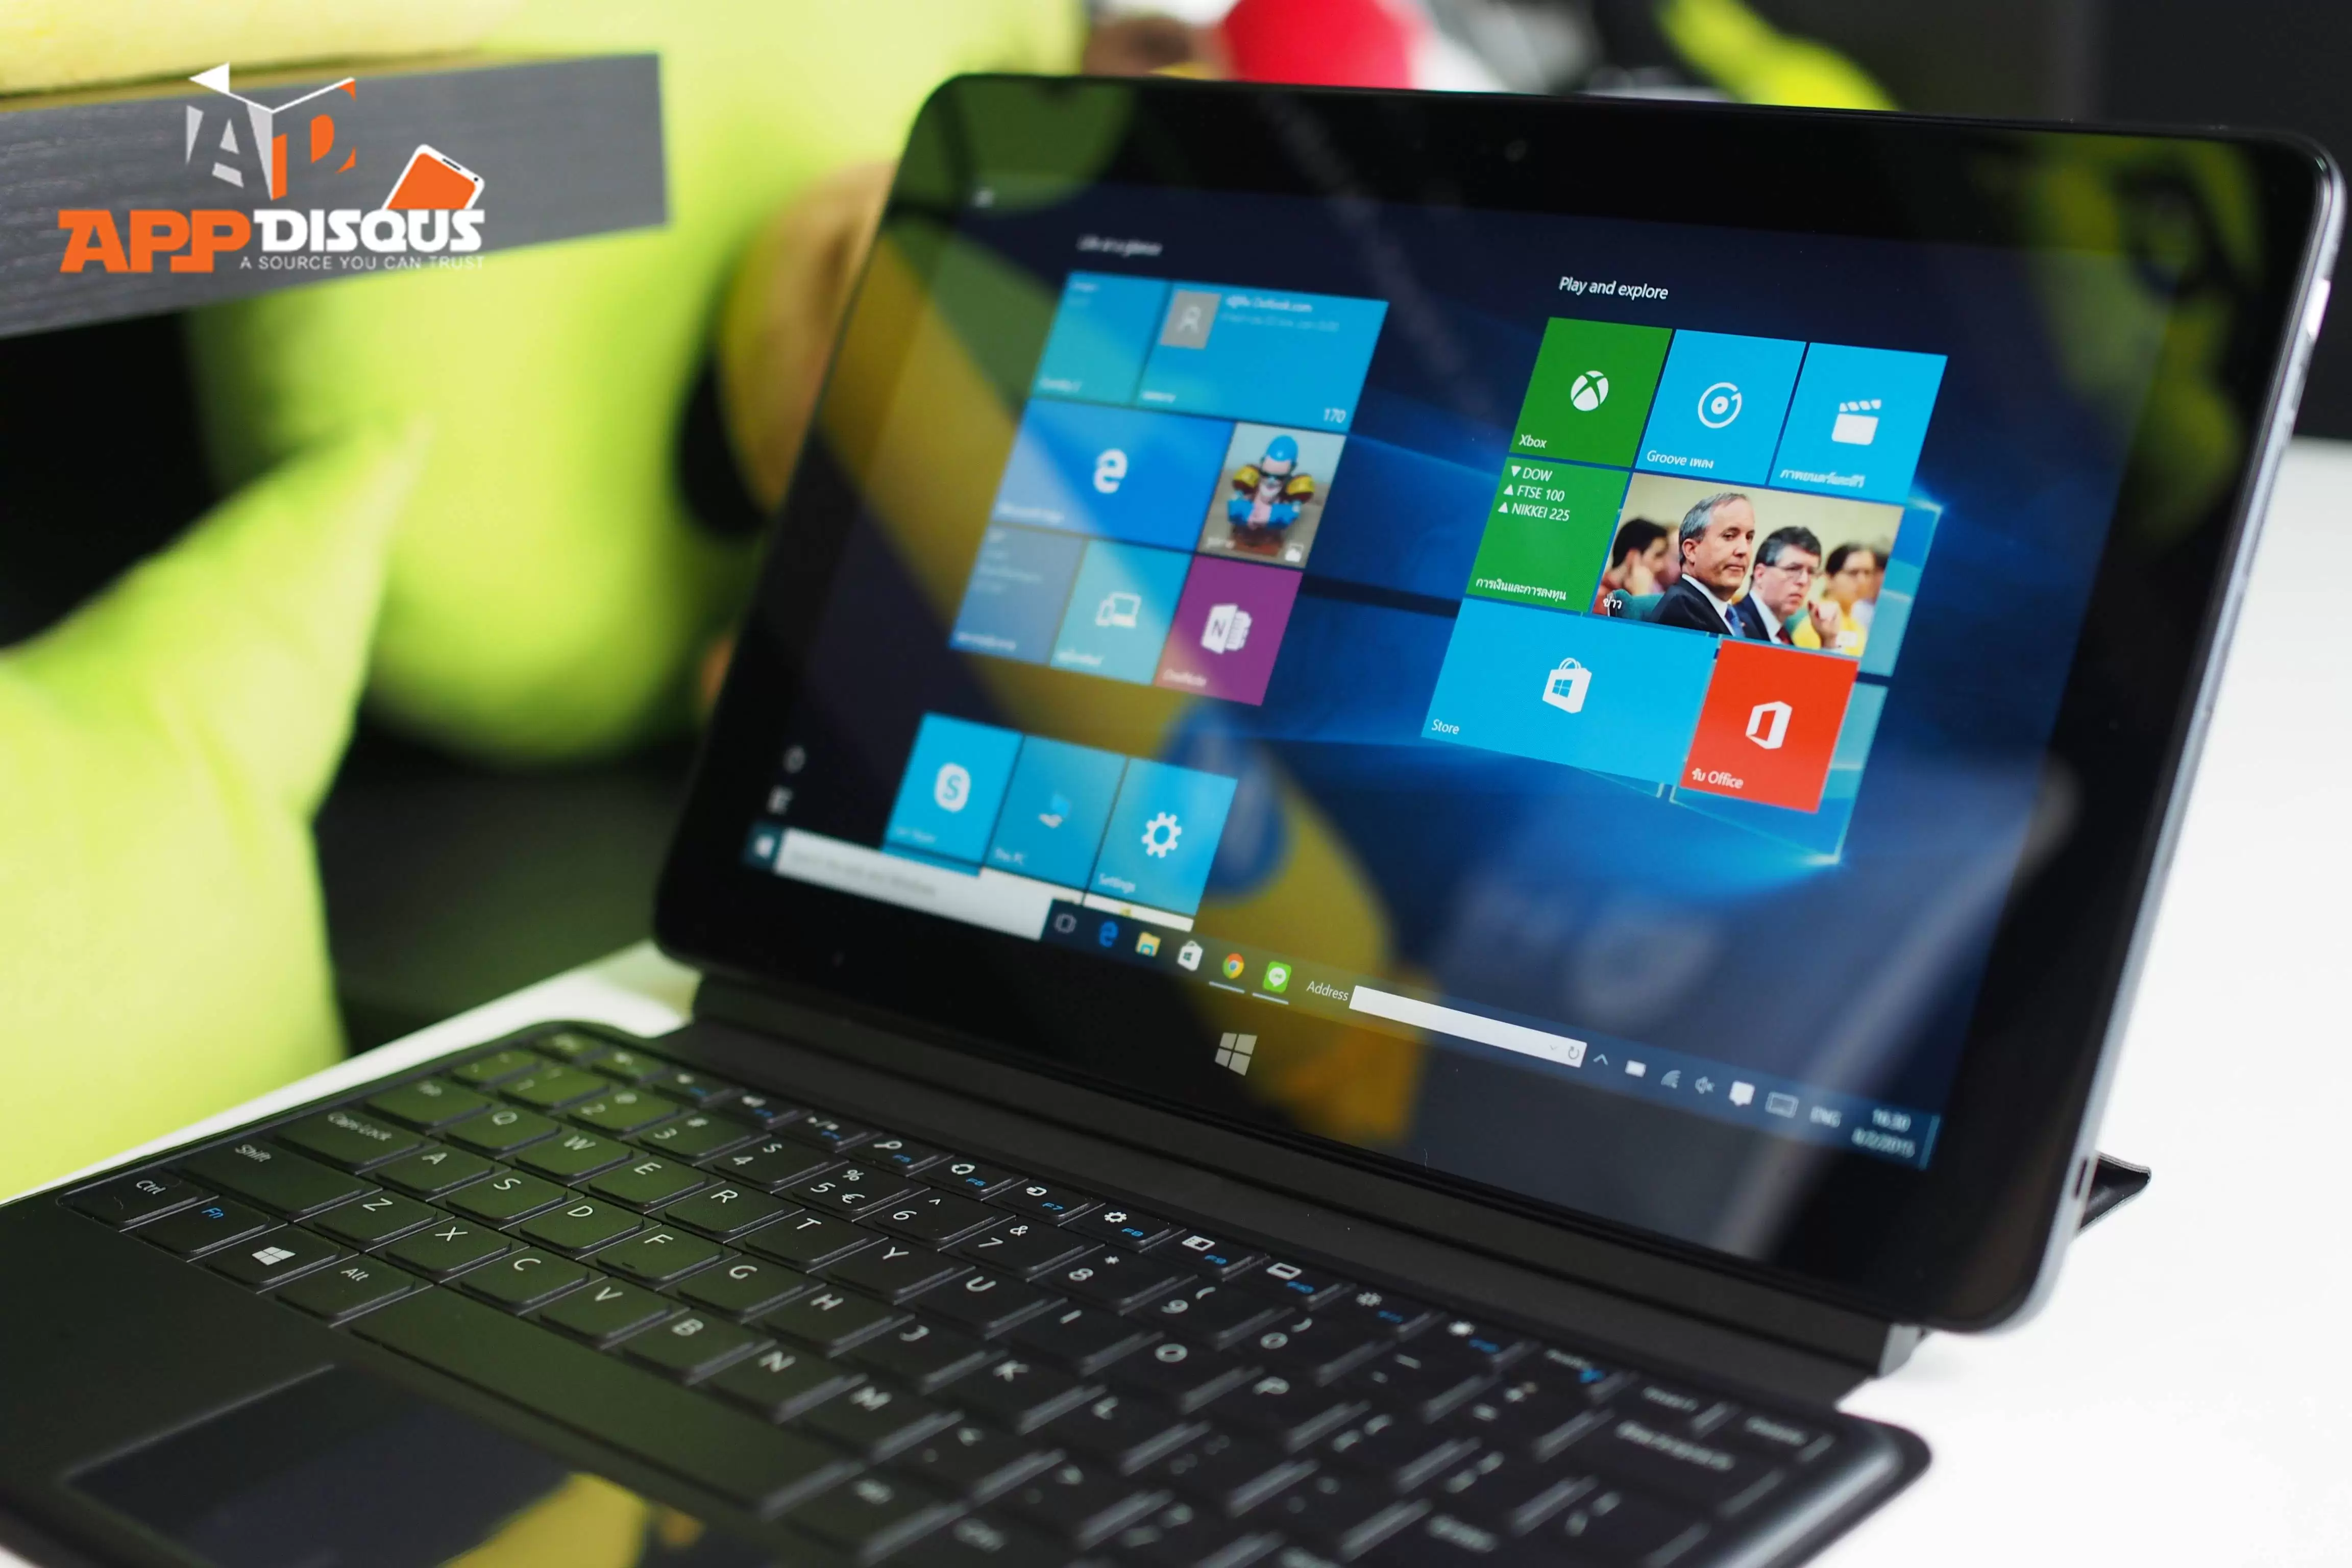 reviews DELL Venue 11 Pro 11 | 2 in 1 Notebook | รีวิว DELL Venue 11 Pro 7140 กับระบบปฏิบัติการ Windows 10